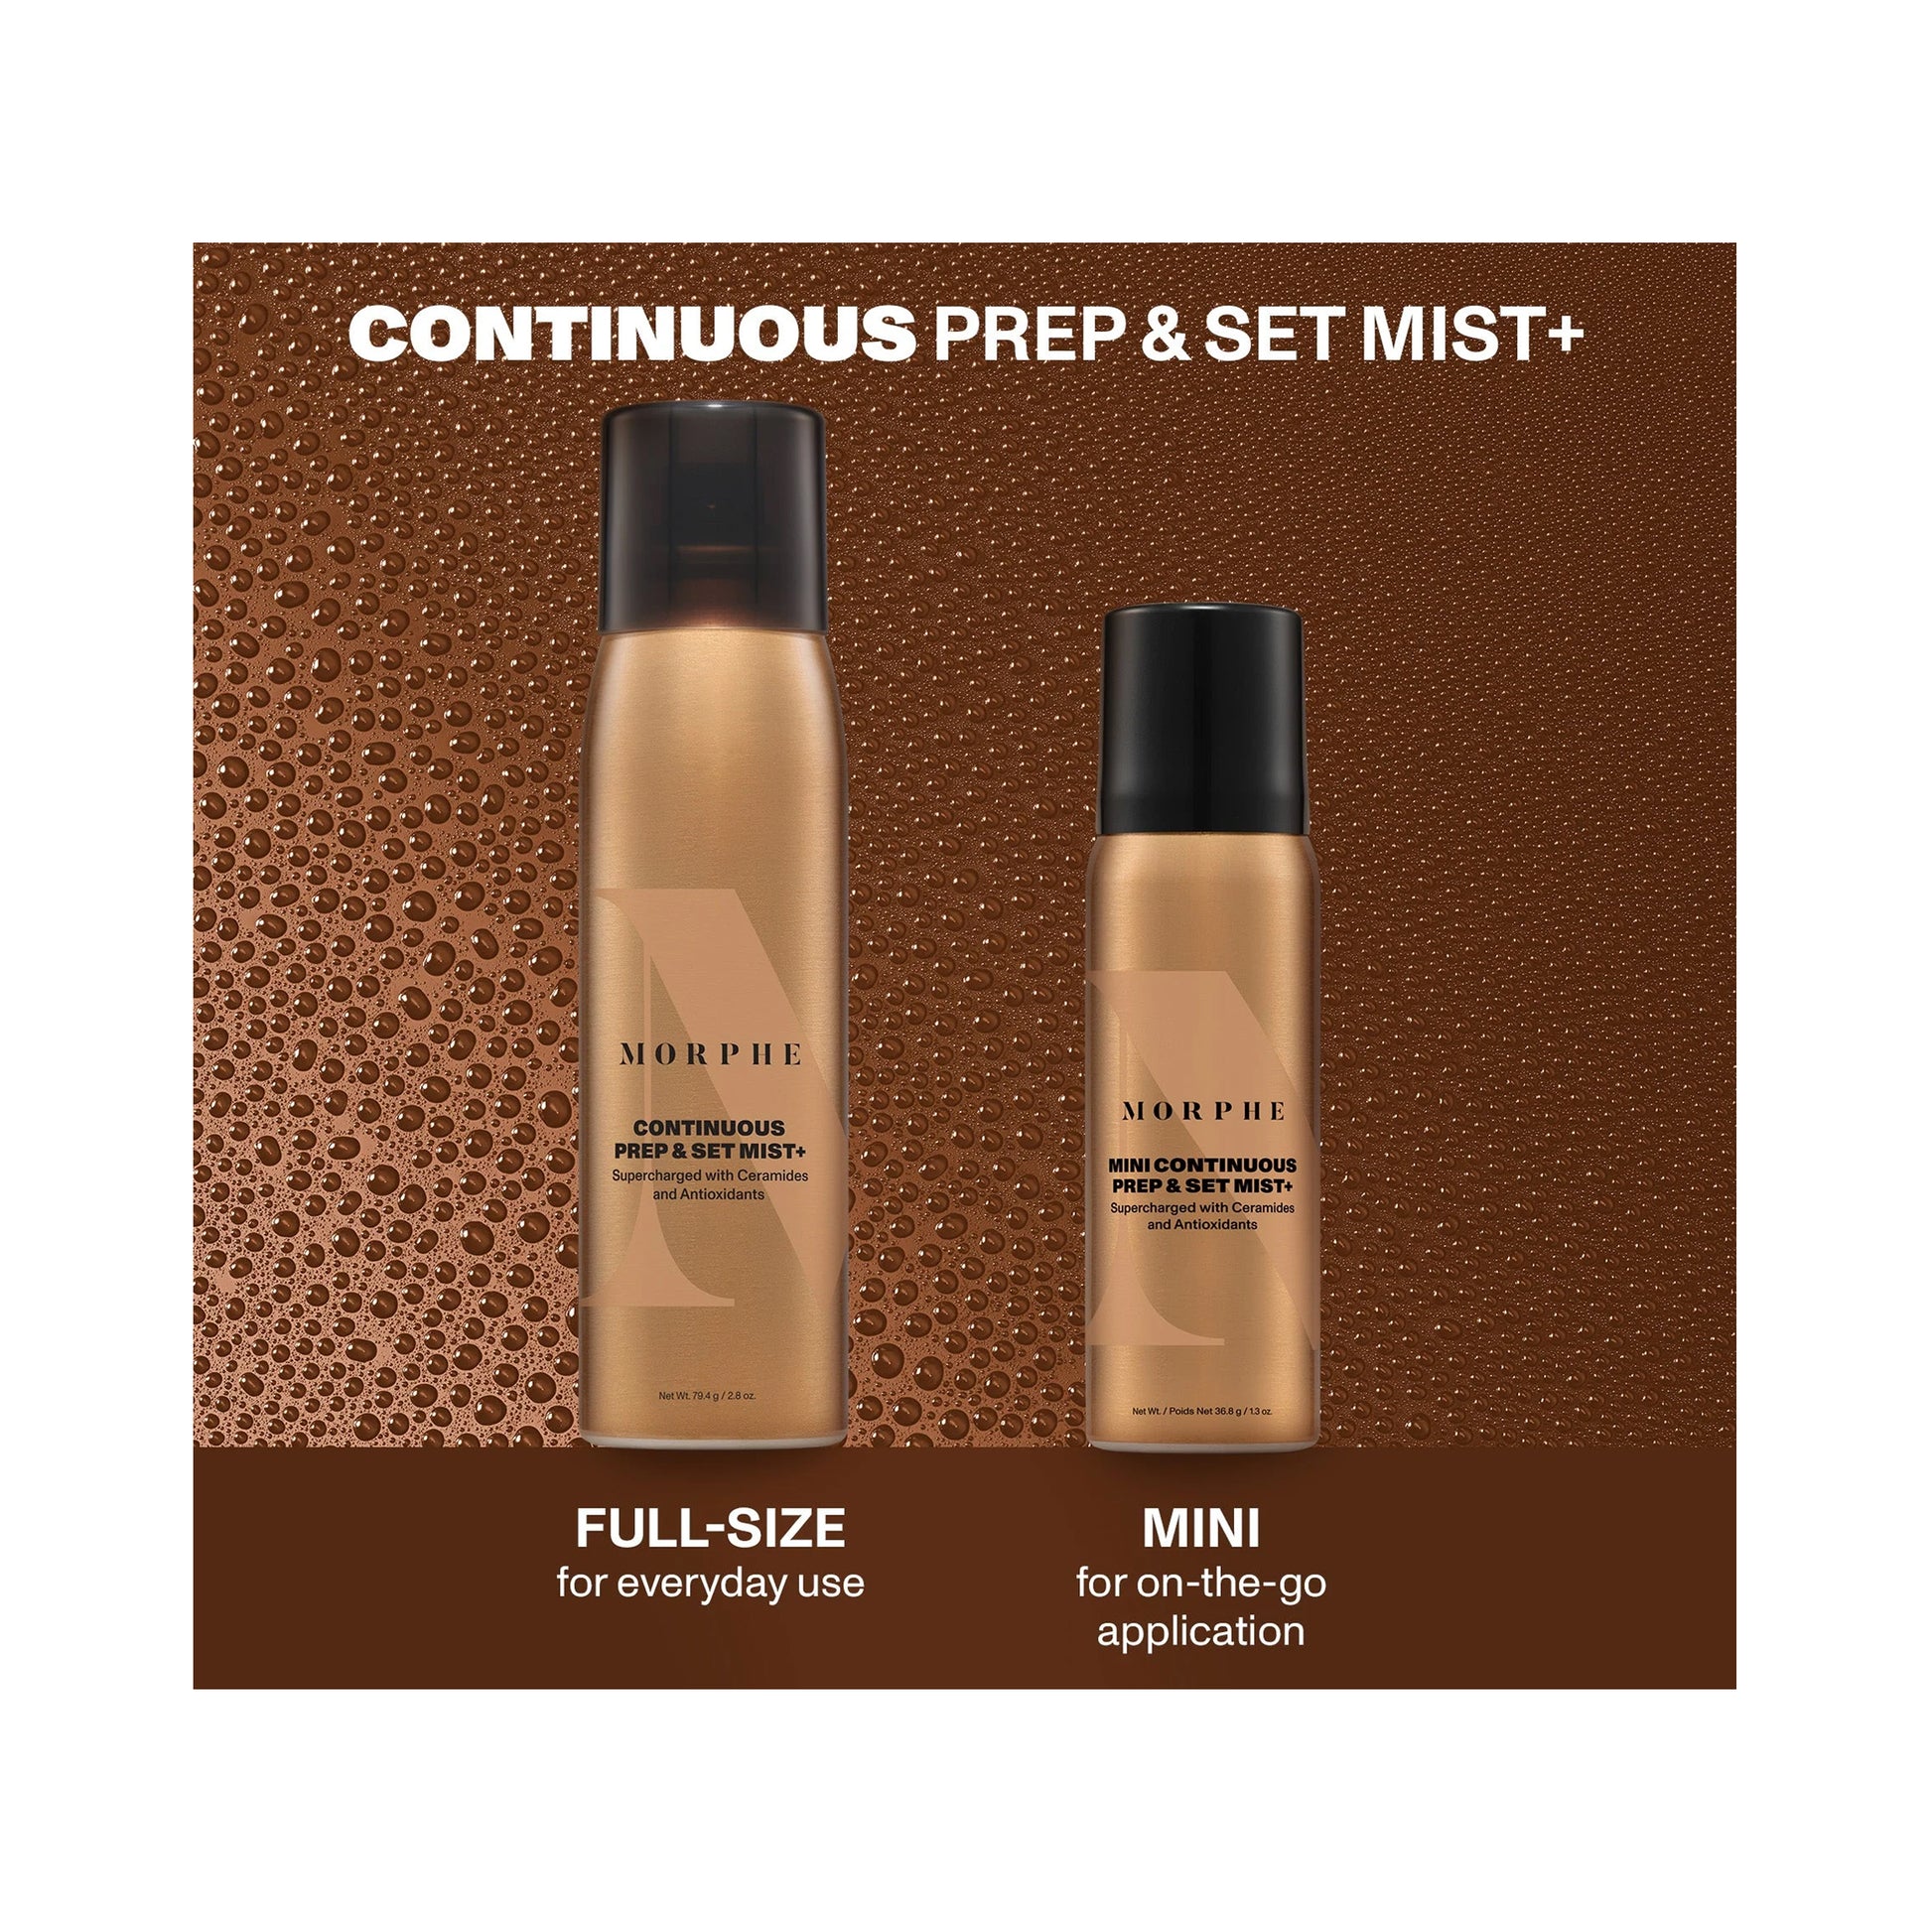 Morphe Cosmetics Continuous Prep & Set Mist+